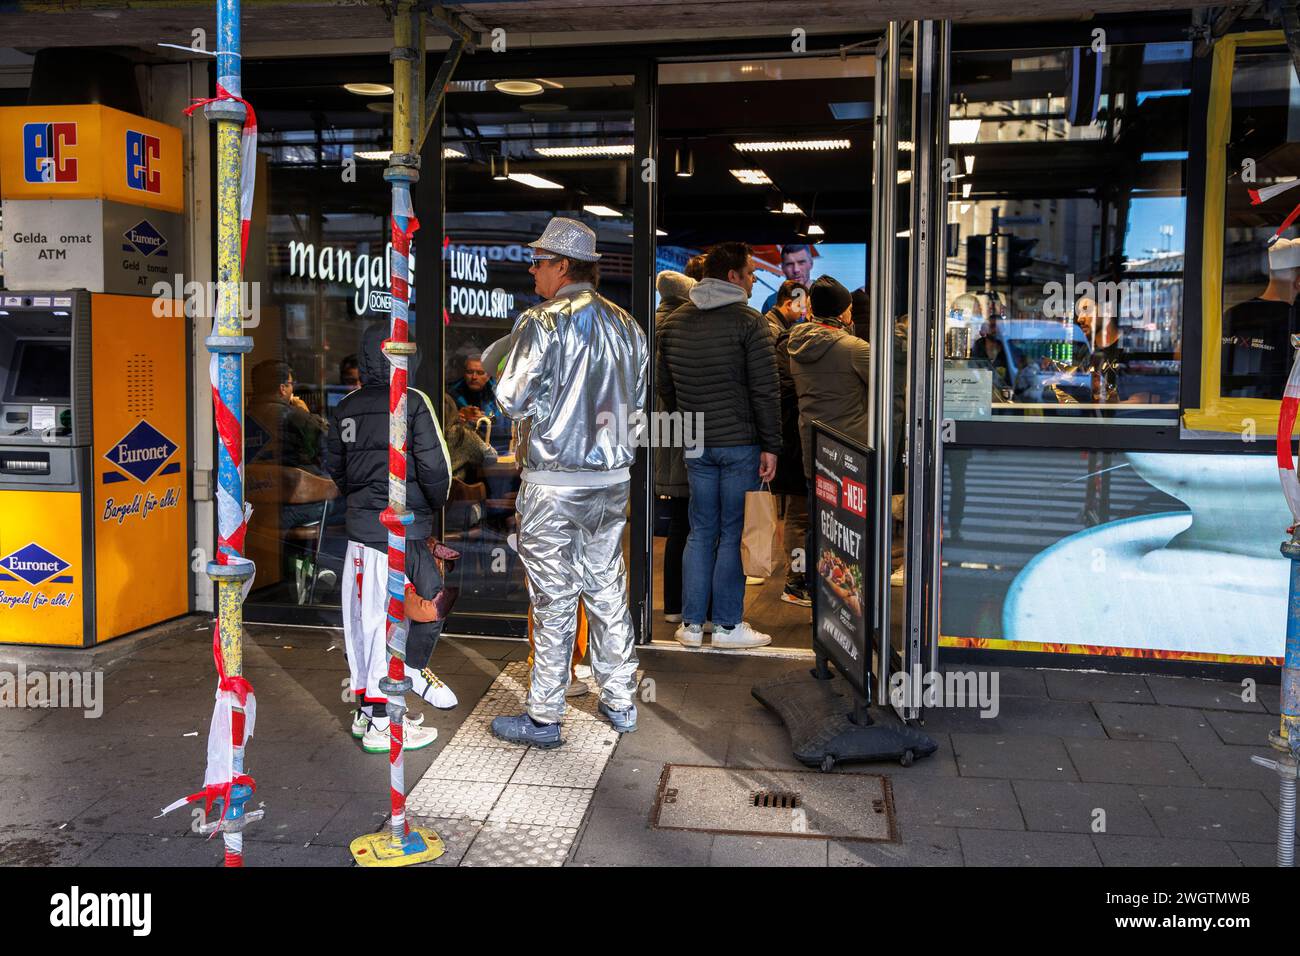 Man indossa un costume d'argento di fronte a un ristorante Mangal Doener in via Komoedien, vicino alla cattedrale di Colonia, Germania. Mann steht in einem si Foto Stock